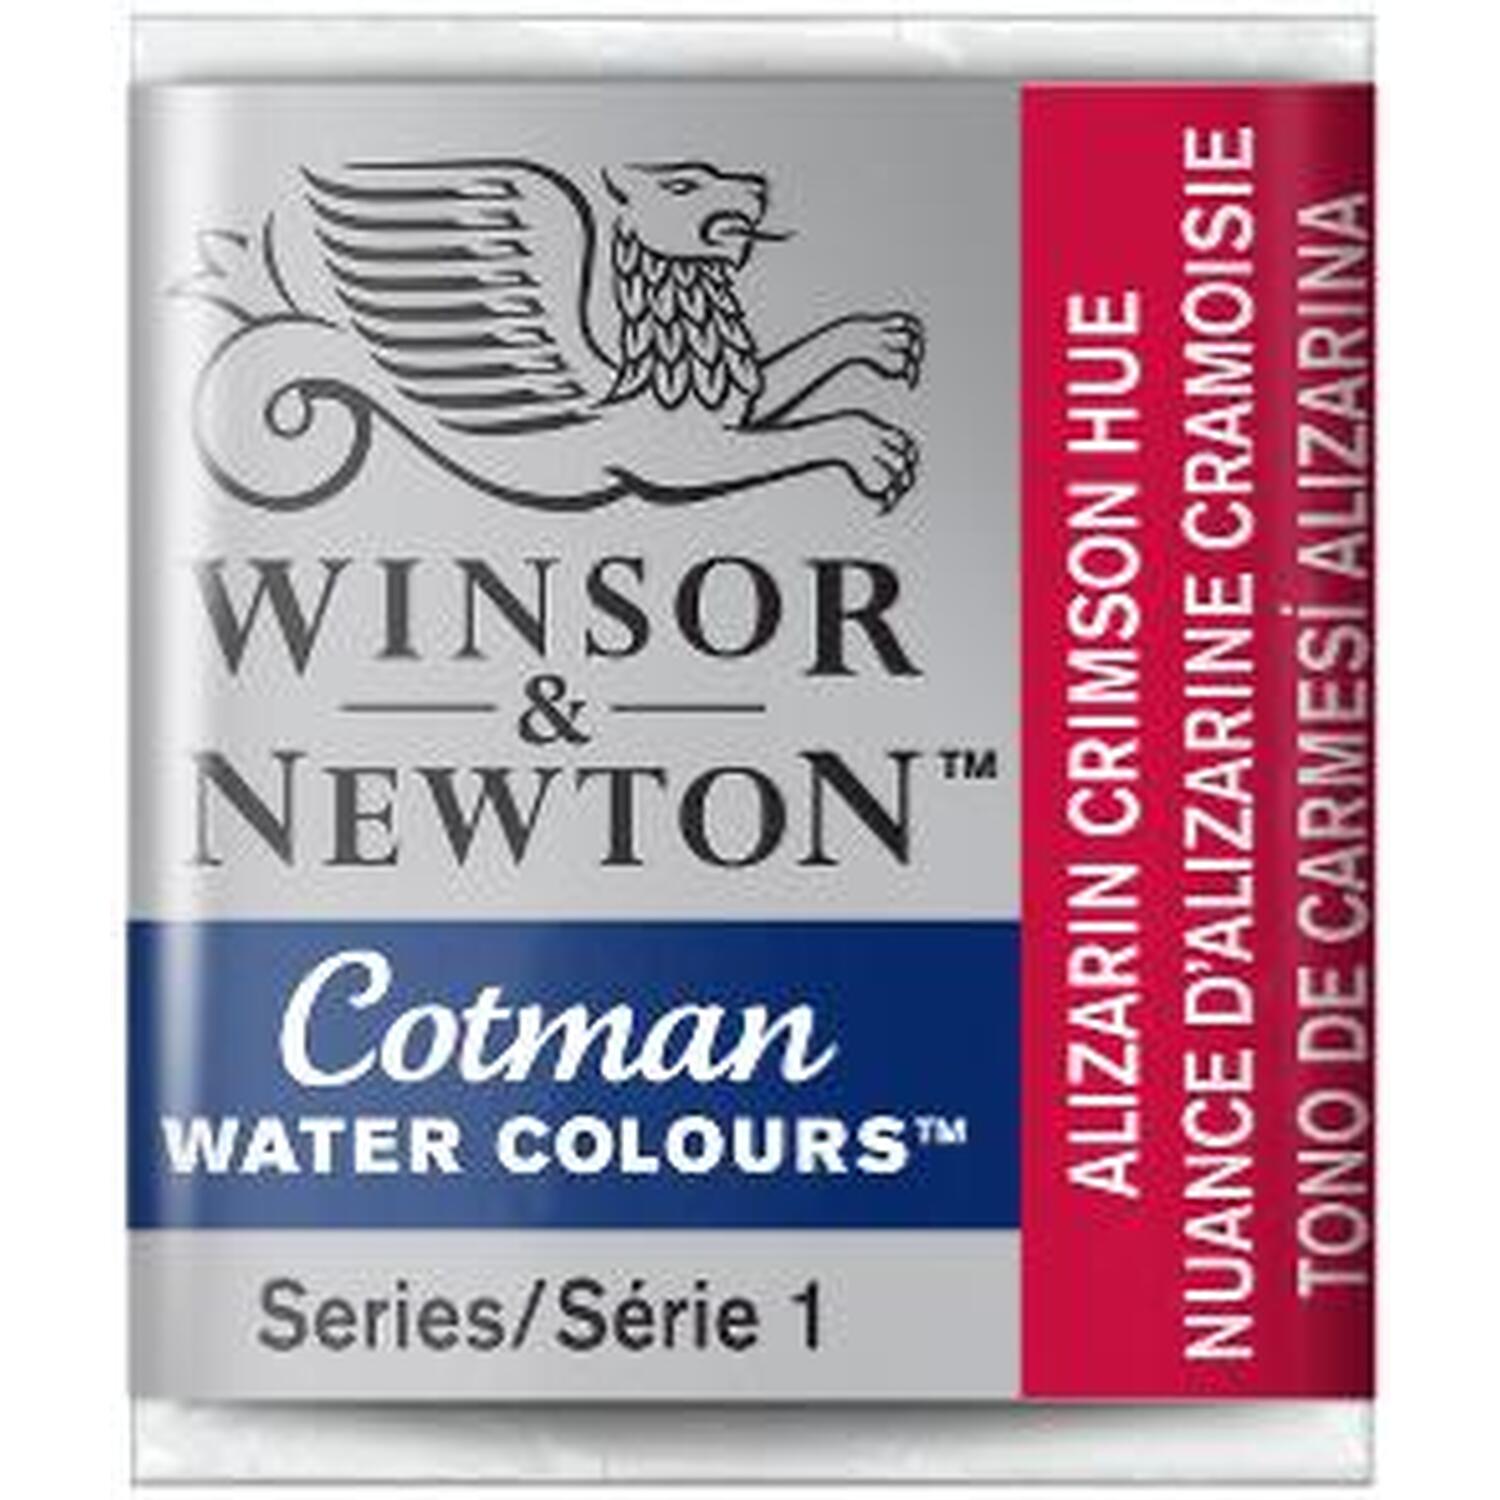 Winsor and Newton Cotman Watercolour Half Pan Paint - Alizarin Crimson Hue Image